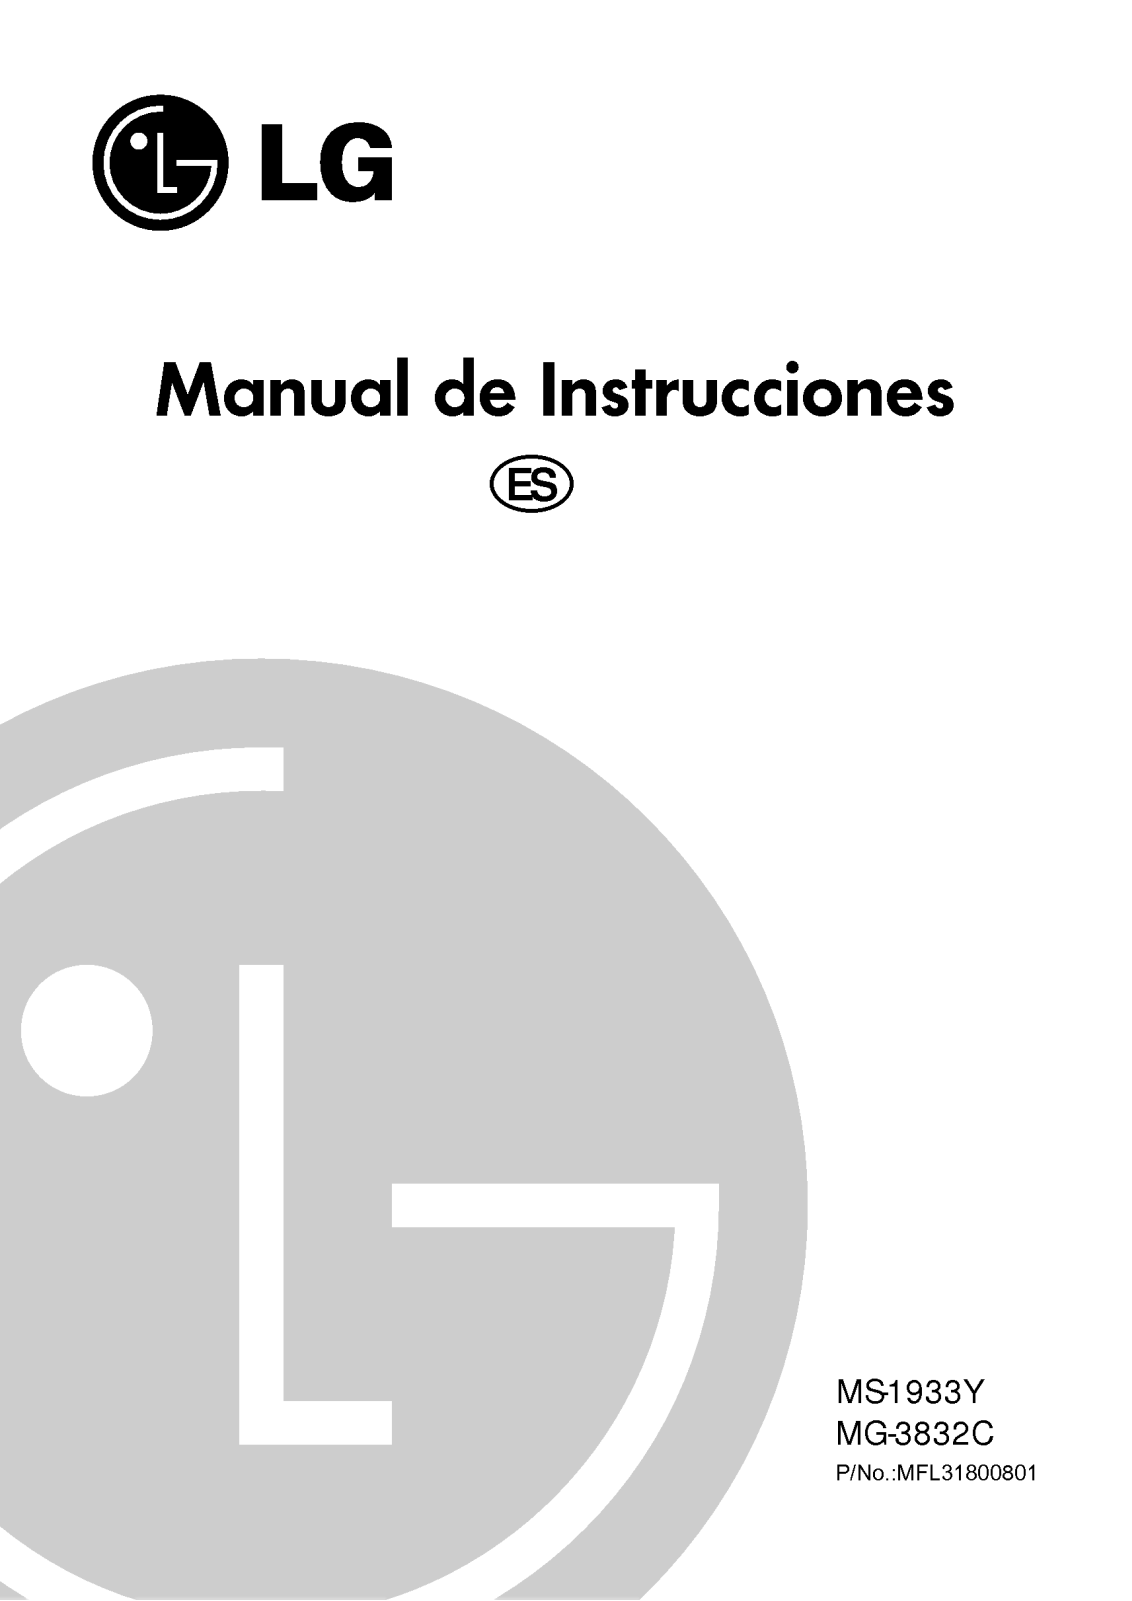 LG MB-3833Y User Manual